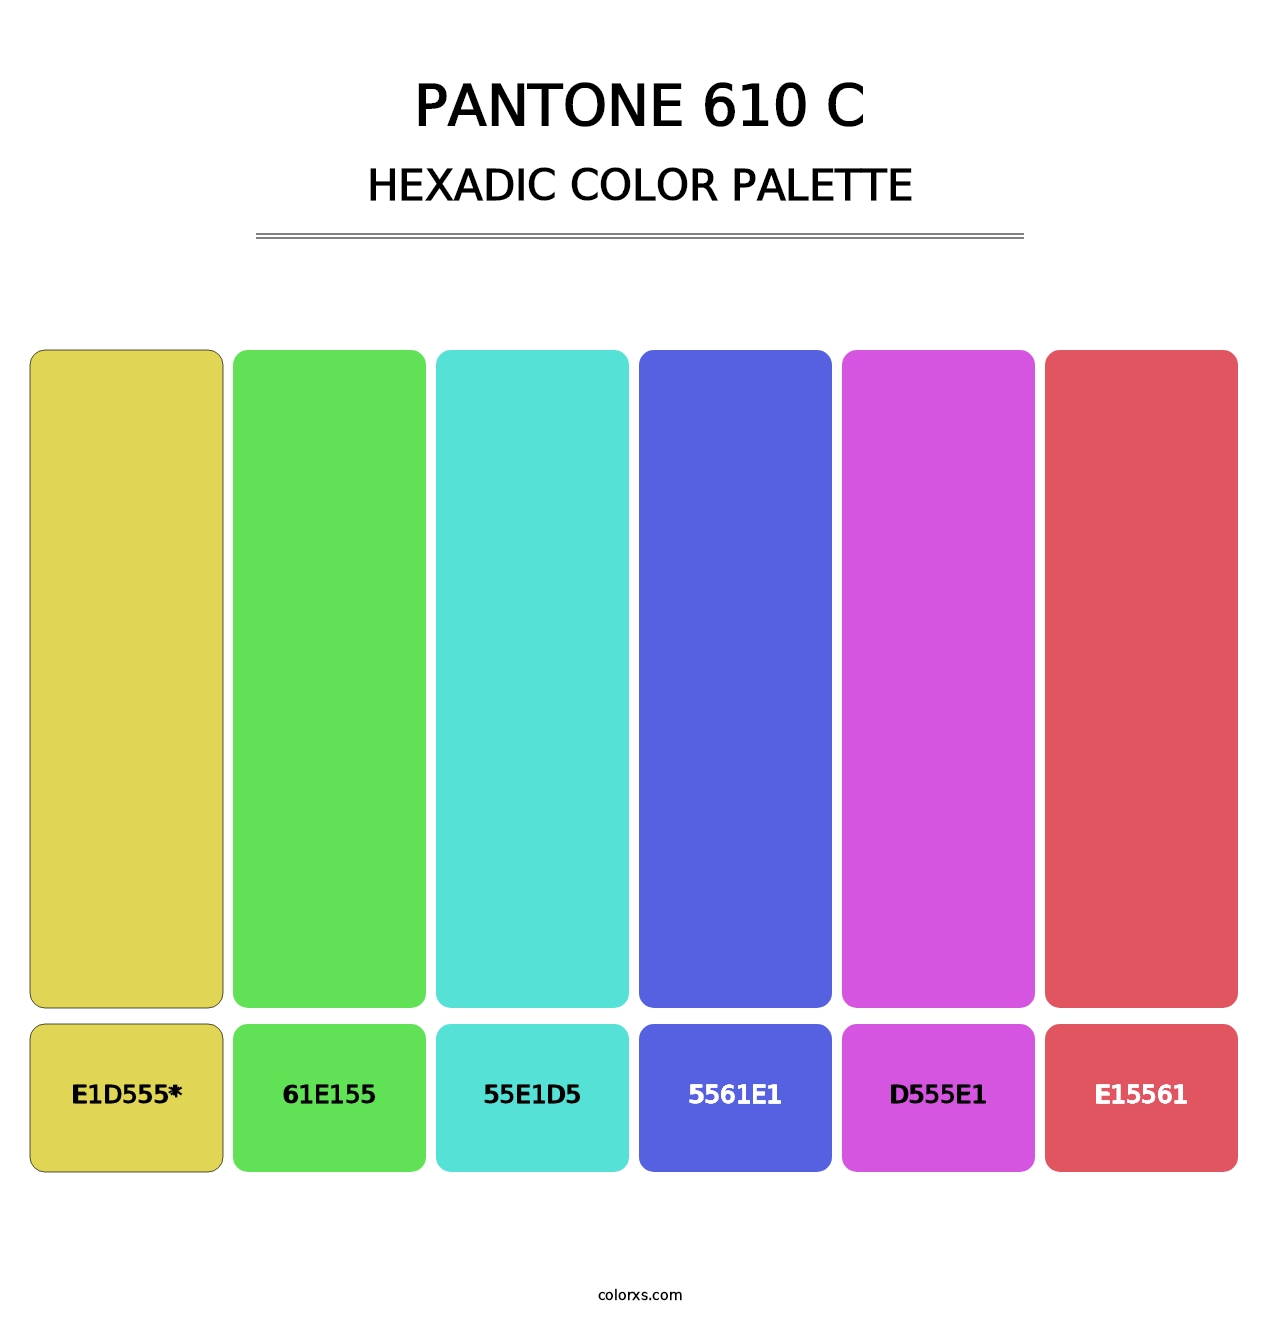 PANTONE 610 C - Hexadic Color Palette